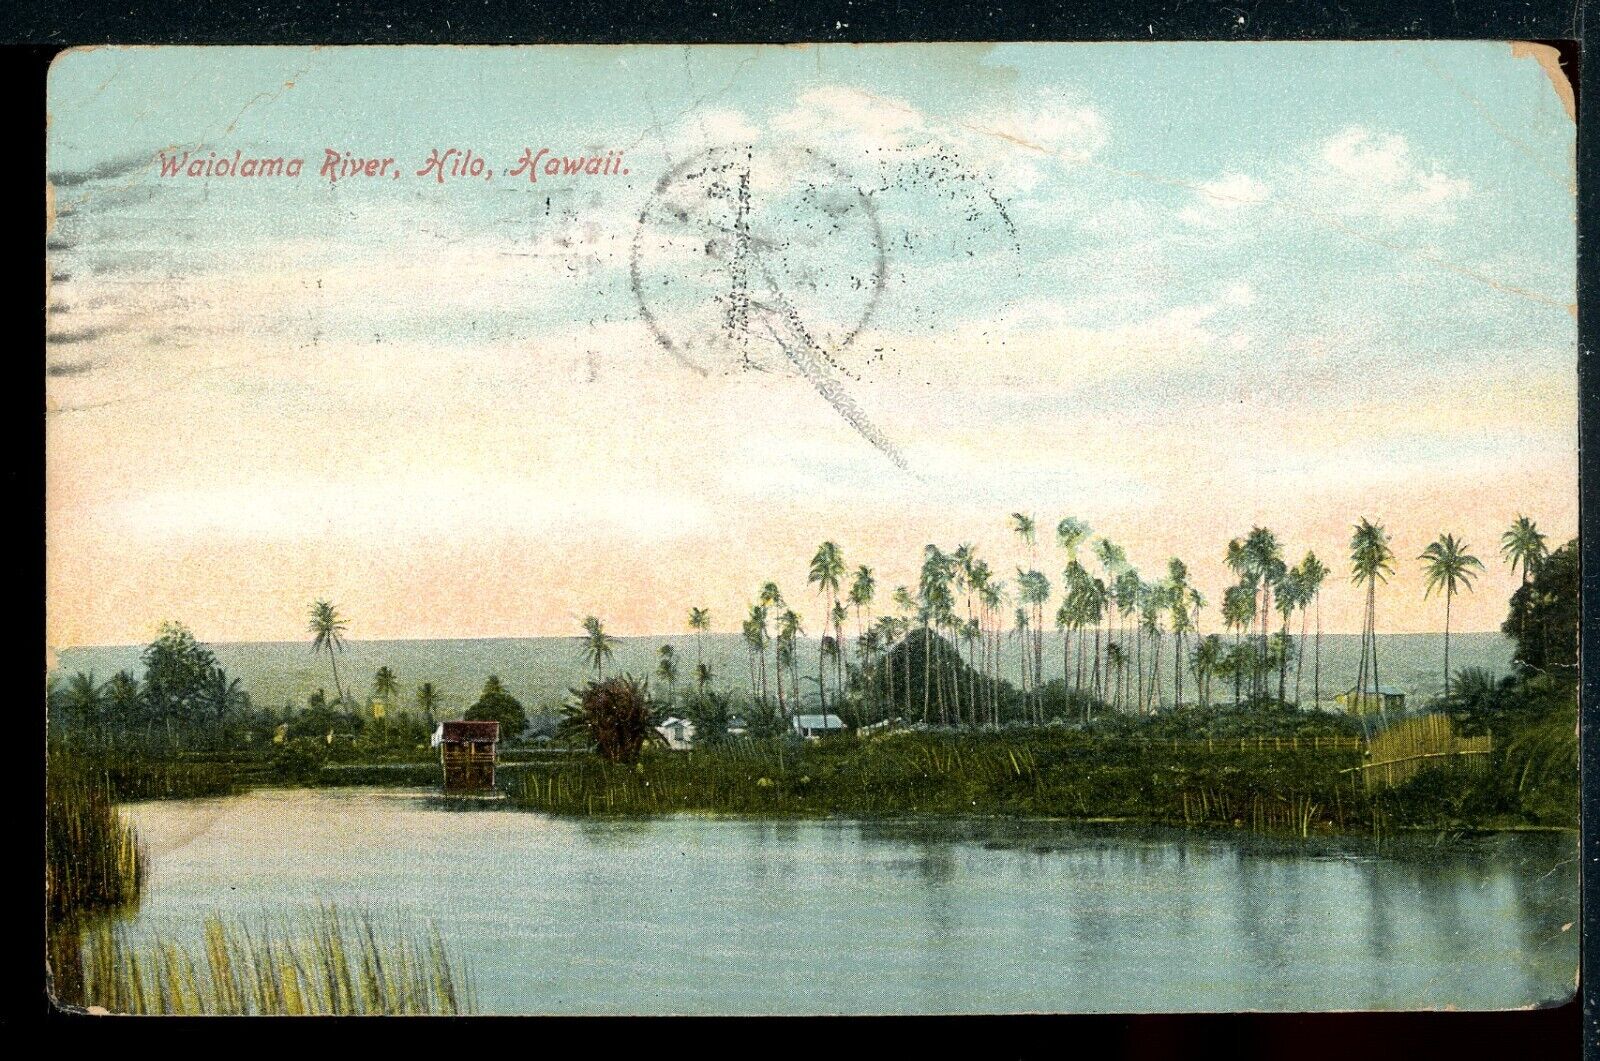 1911 Hilo Hawaii Waiolama River Historic Vintage Postcard Wall Nichols Pub.